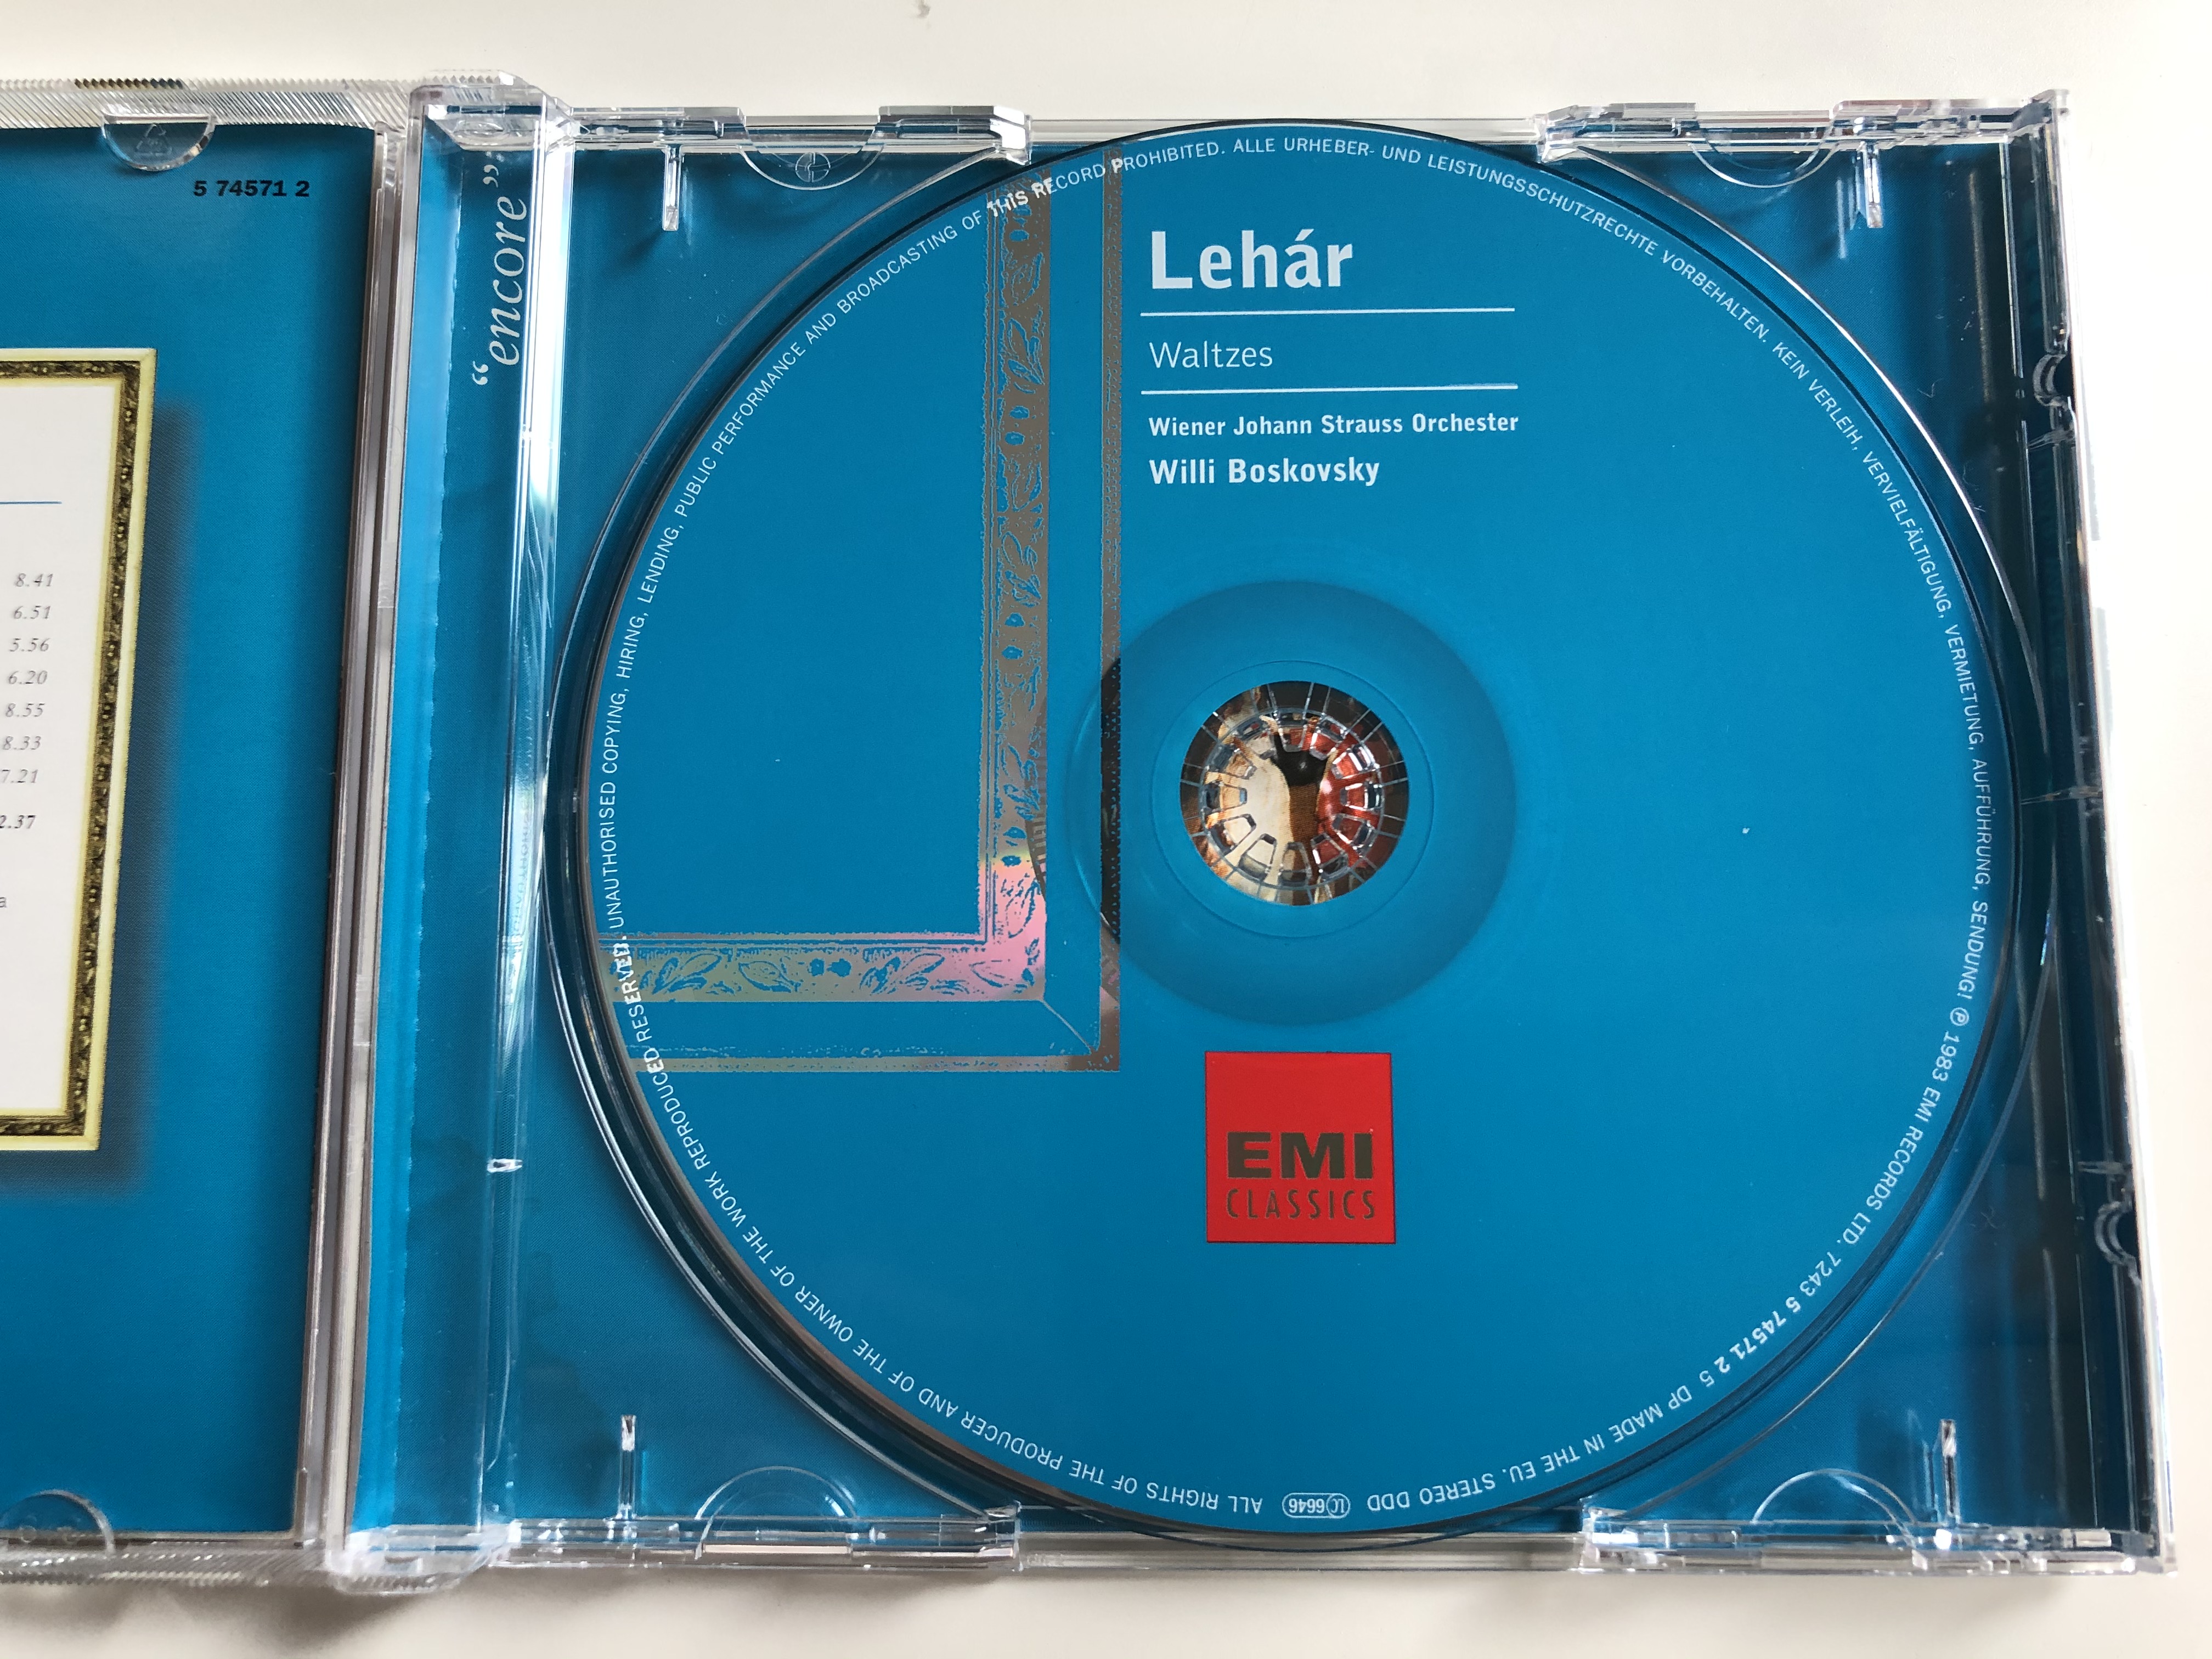 lehar-waltzes-wiener-johann-strauss-orchester-willi-boskovsky-emi-classics-audio-cd-2001-stereo-724357457125-5-.jpg